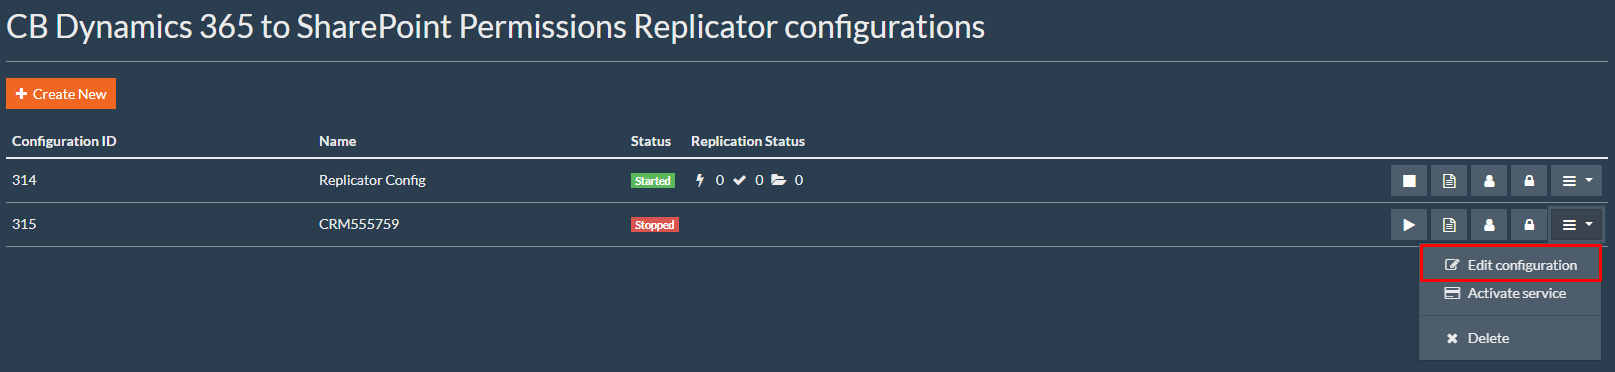 Edit configuration Option